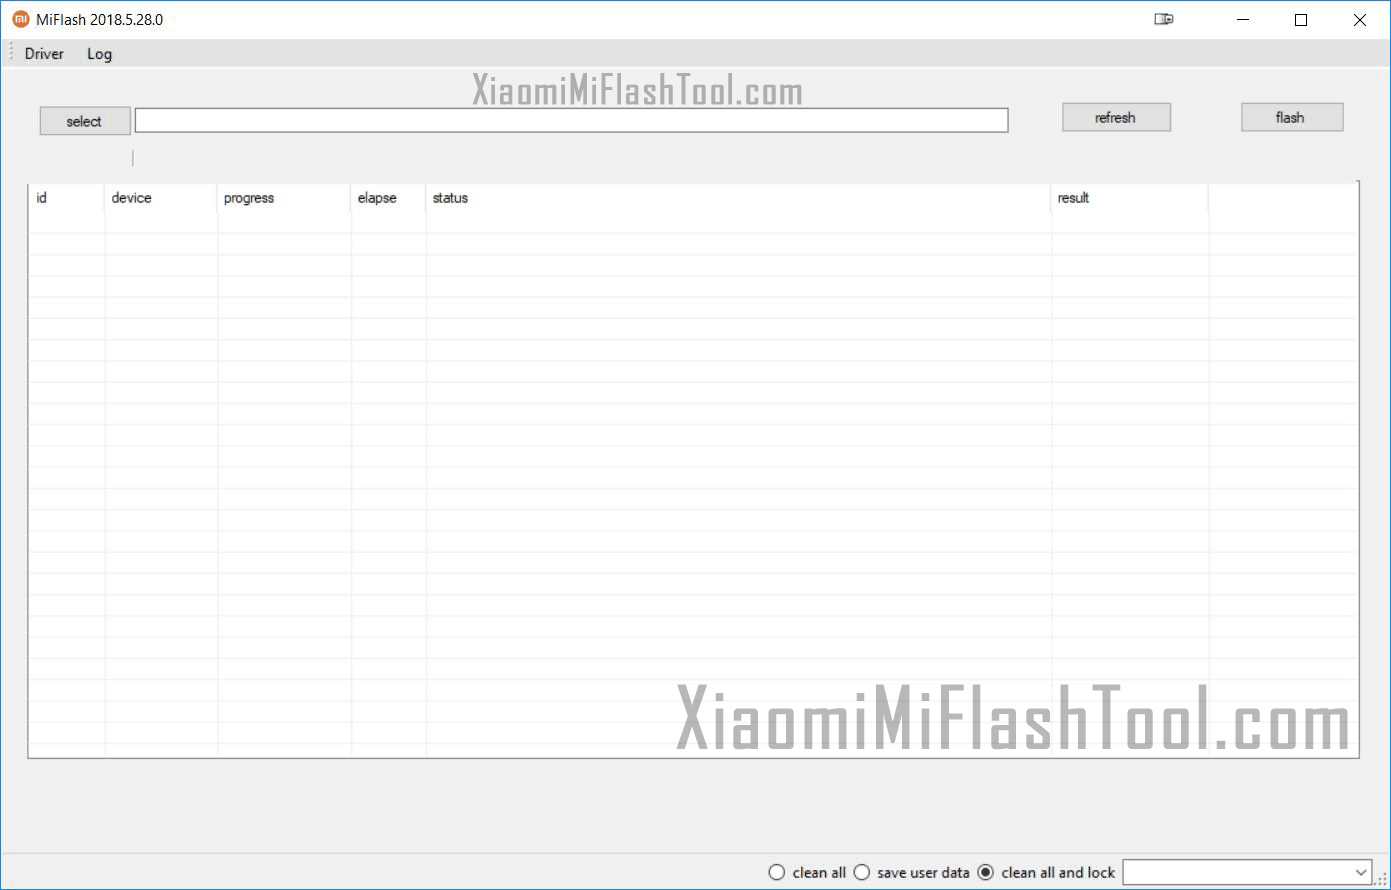 MiFlash 2018.5.28.0 - Xiaomi Flash Tool 20180528